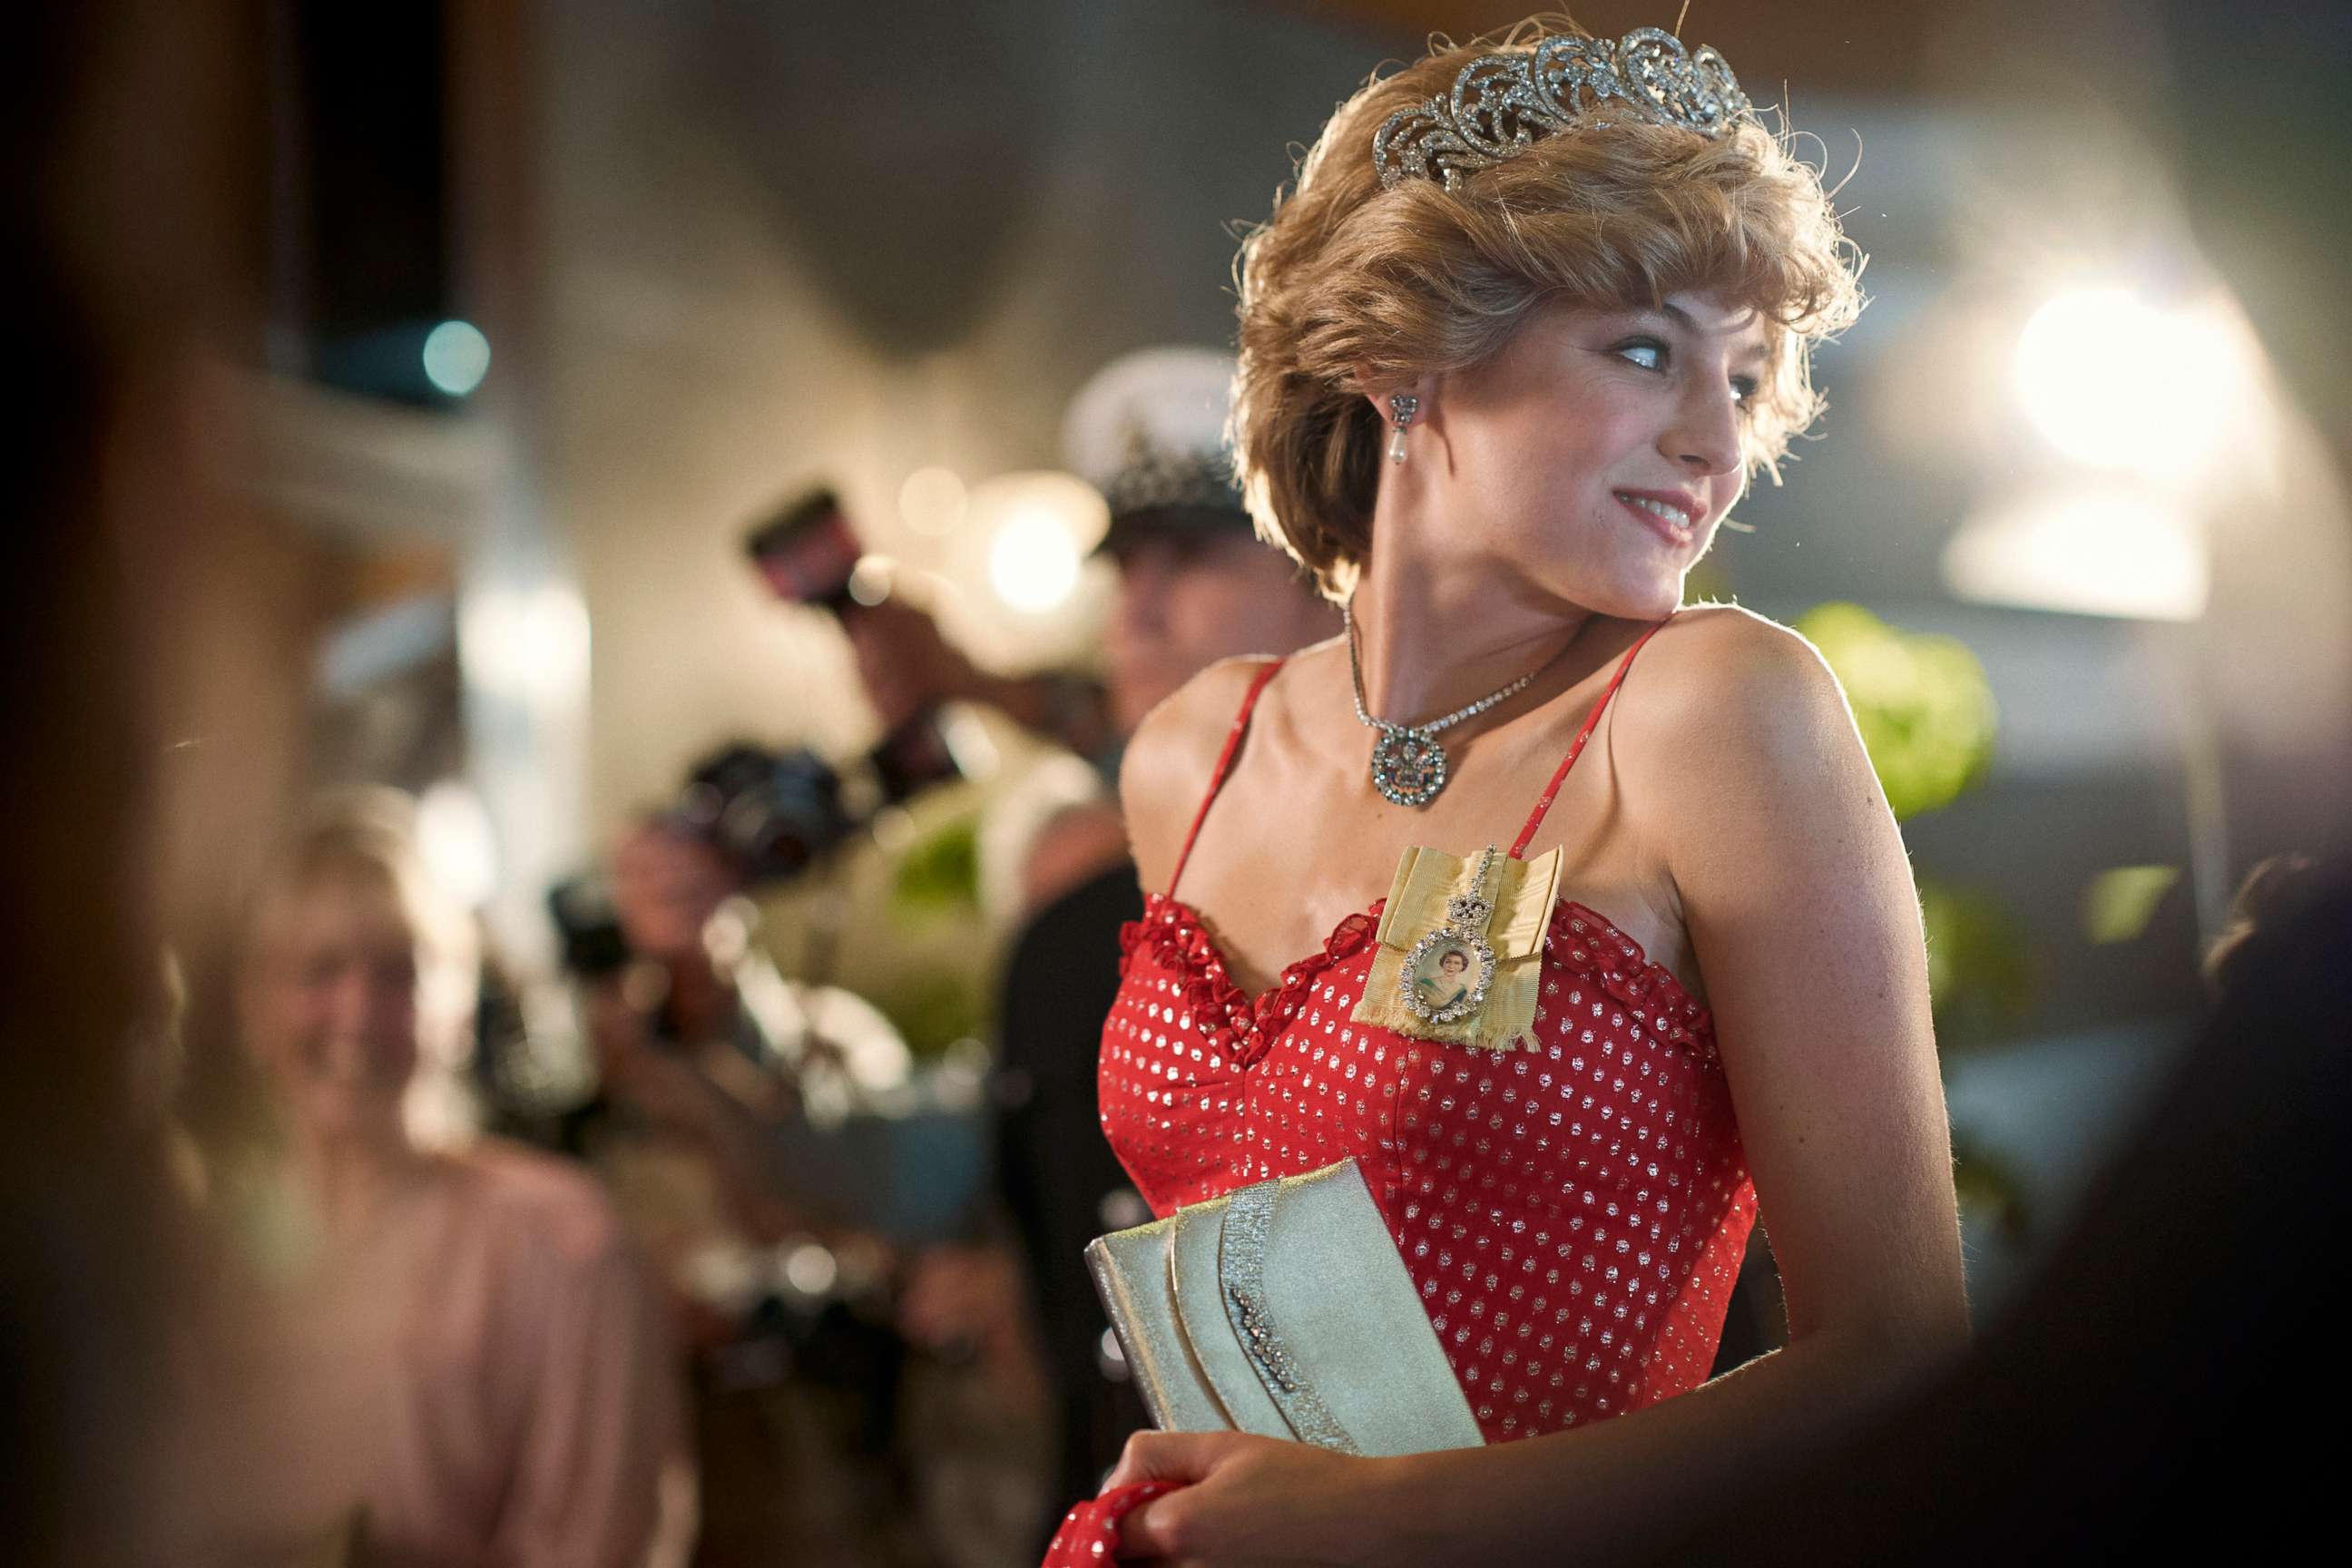 PHOTO: Emma Corrin portrays Diana Princess of Wales in Season 4 of "The Crown."